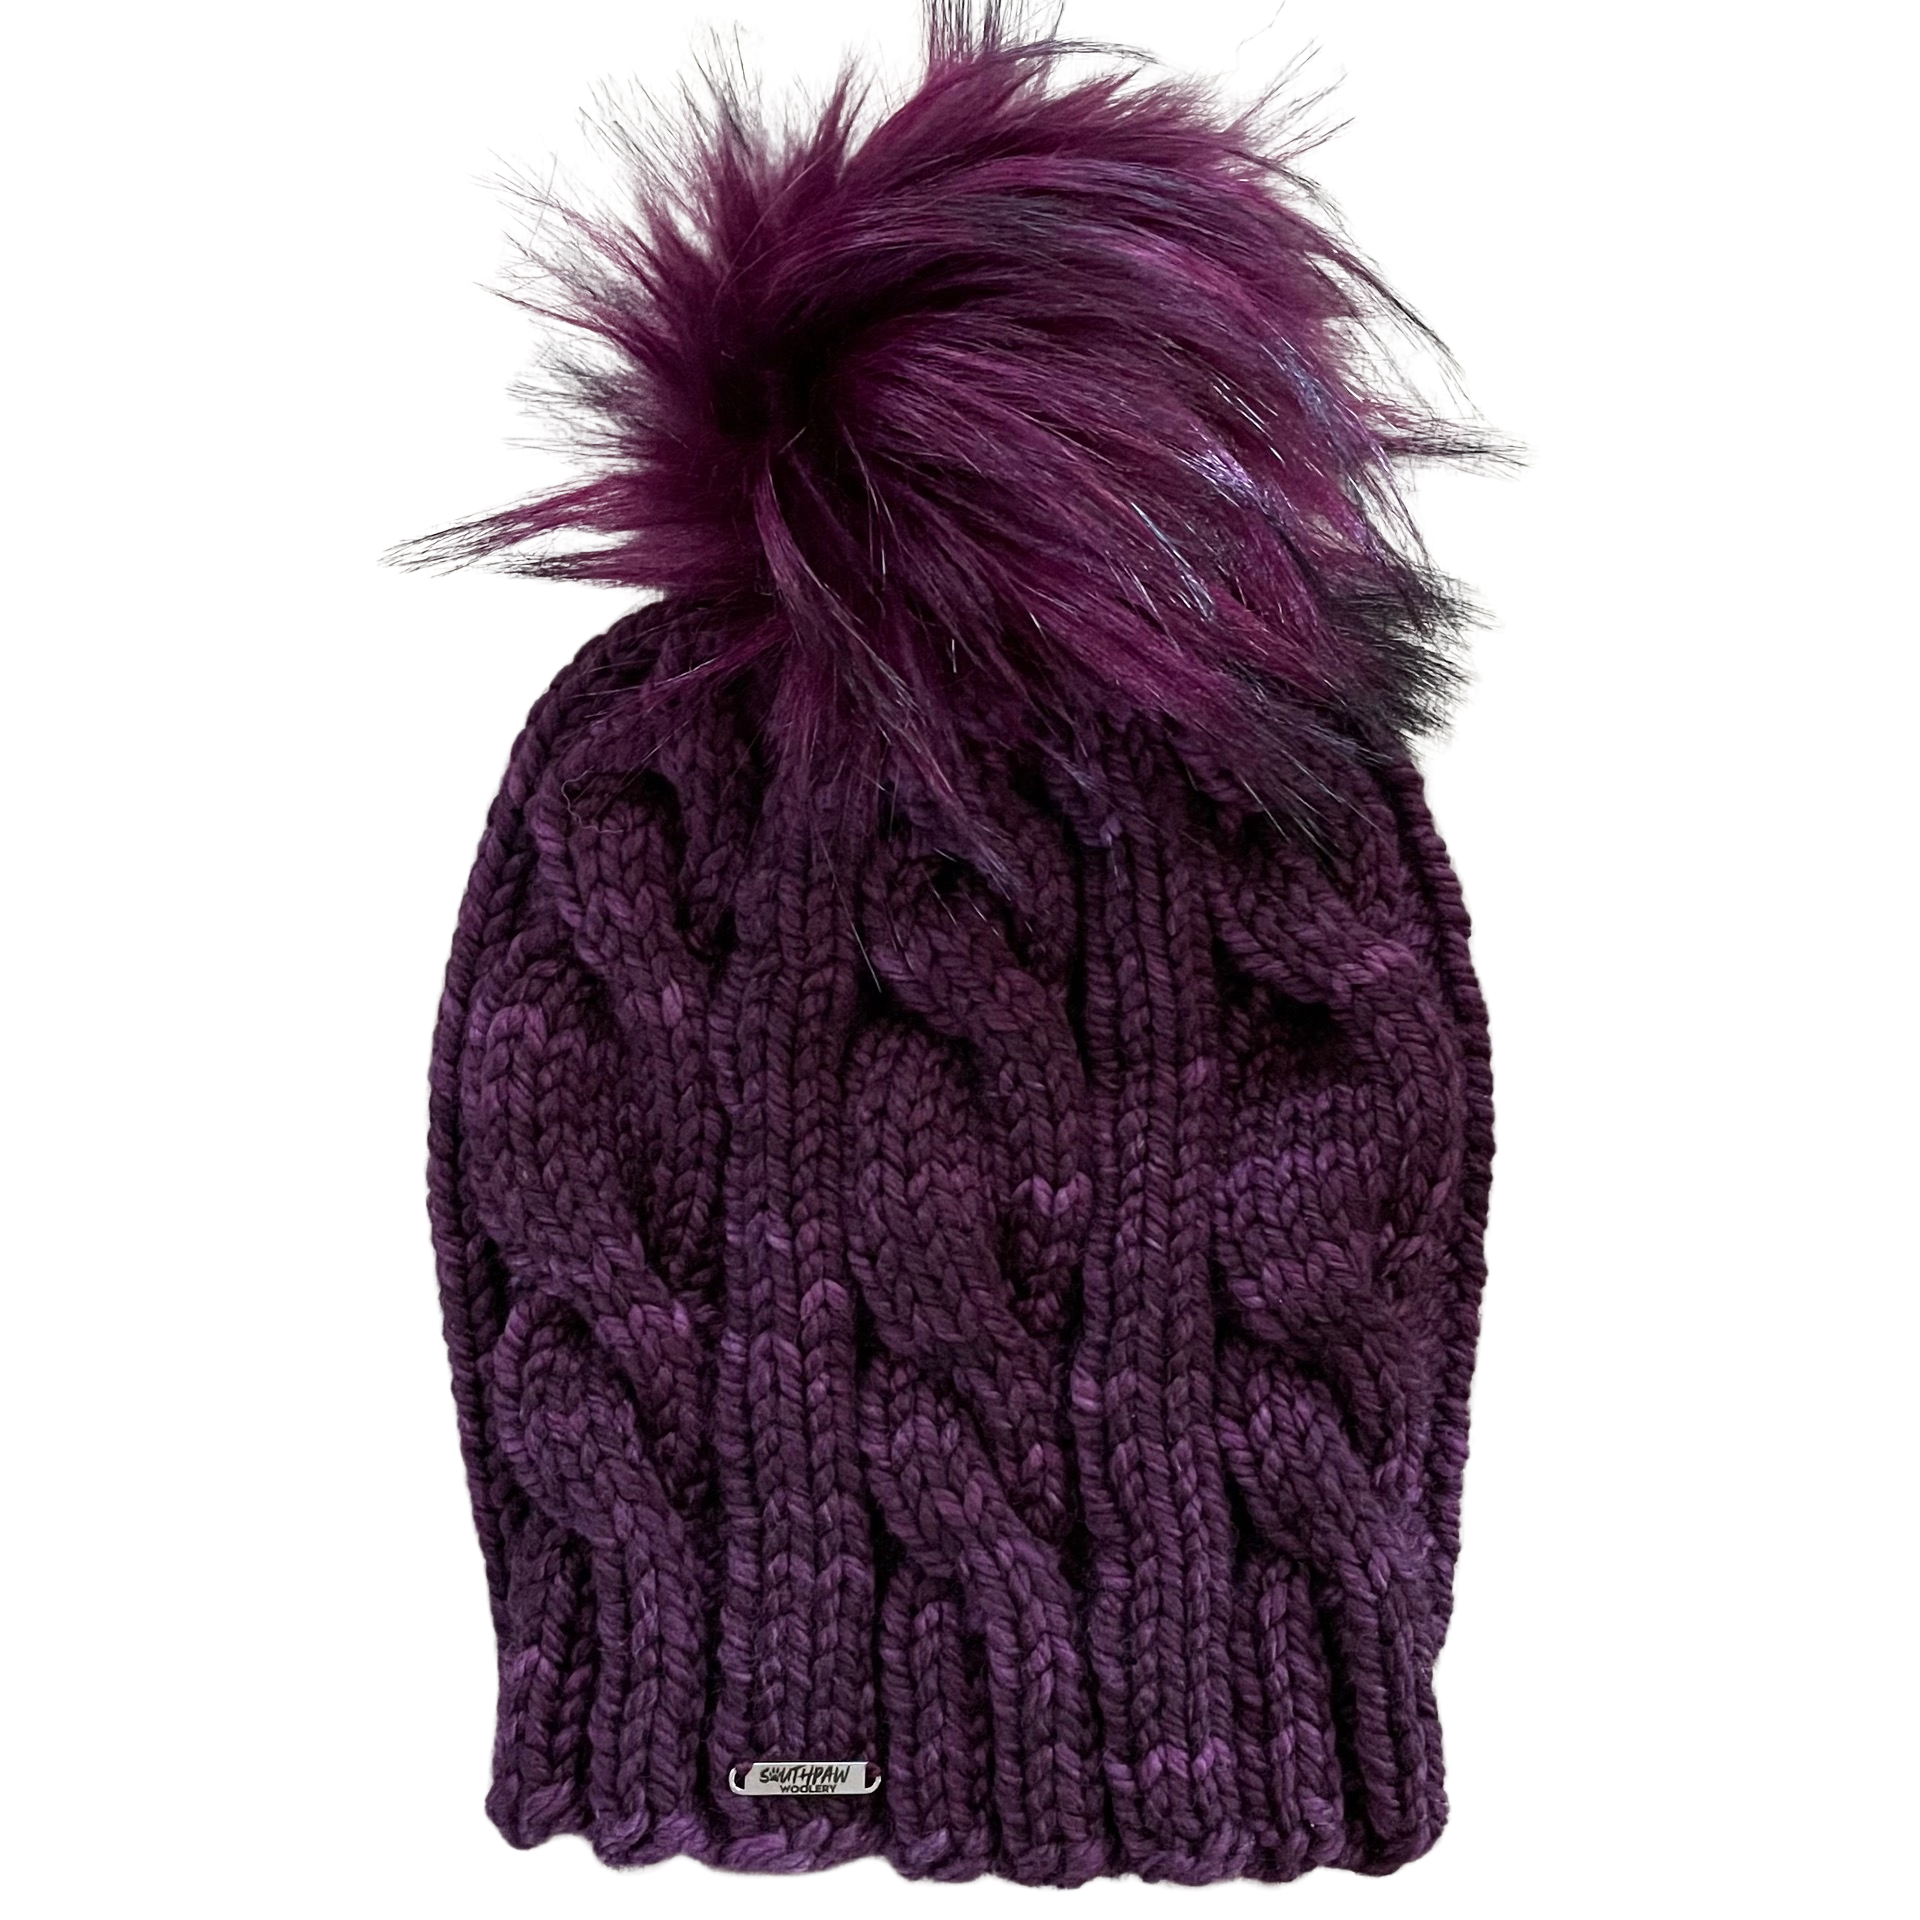 Adult Luxury Hand Knit Hat | Merino Wool | Merlot